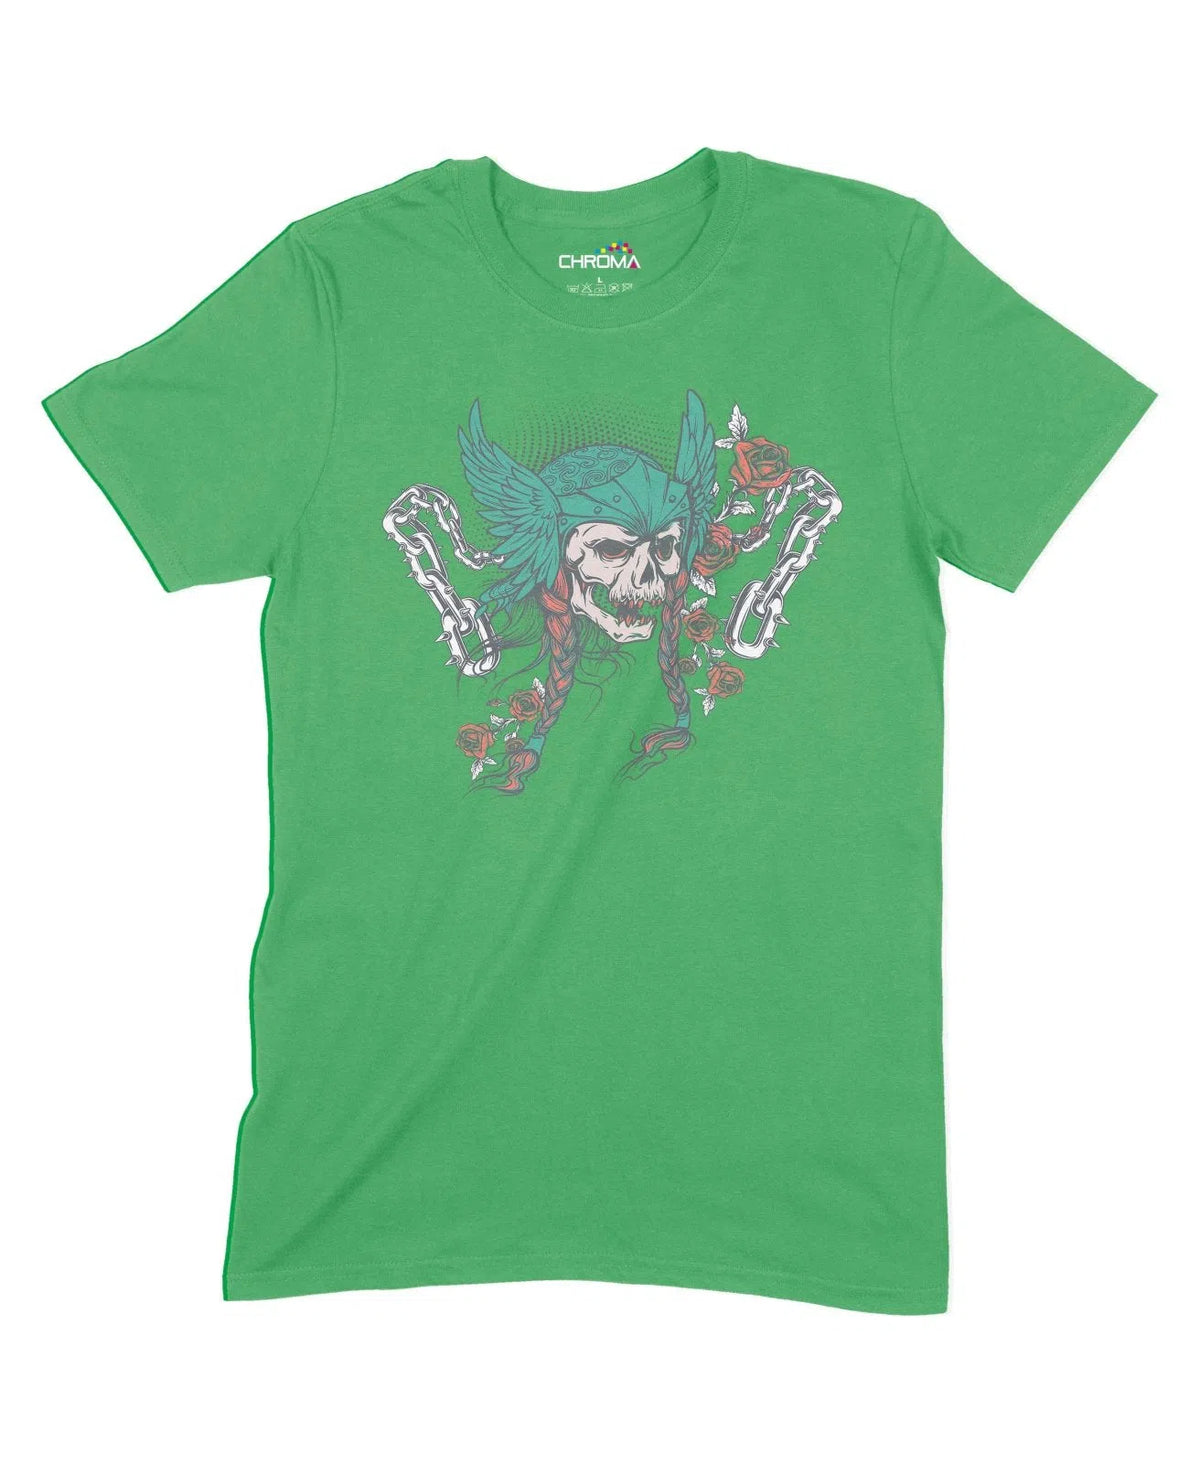 Chained Skull Maiden Unisex Adult T-Shirt Chroma Clothing